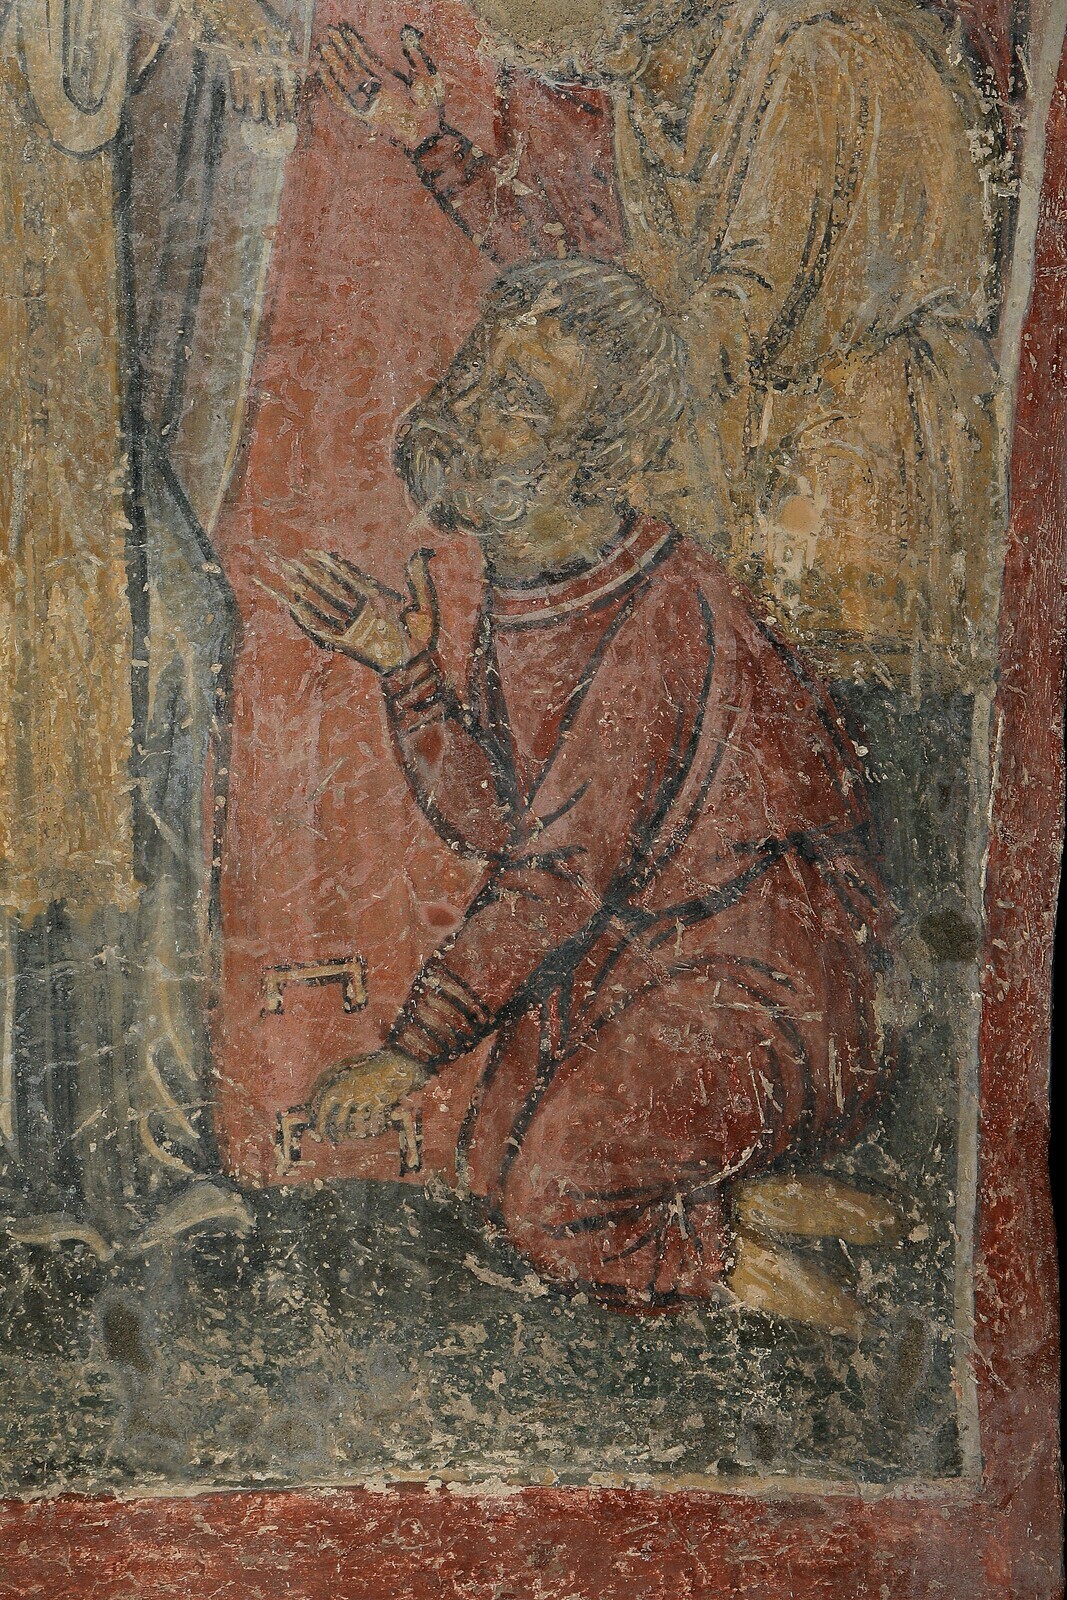 Saint Nicholas Giving Alms, detail